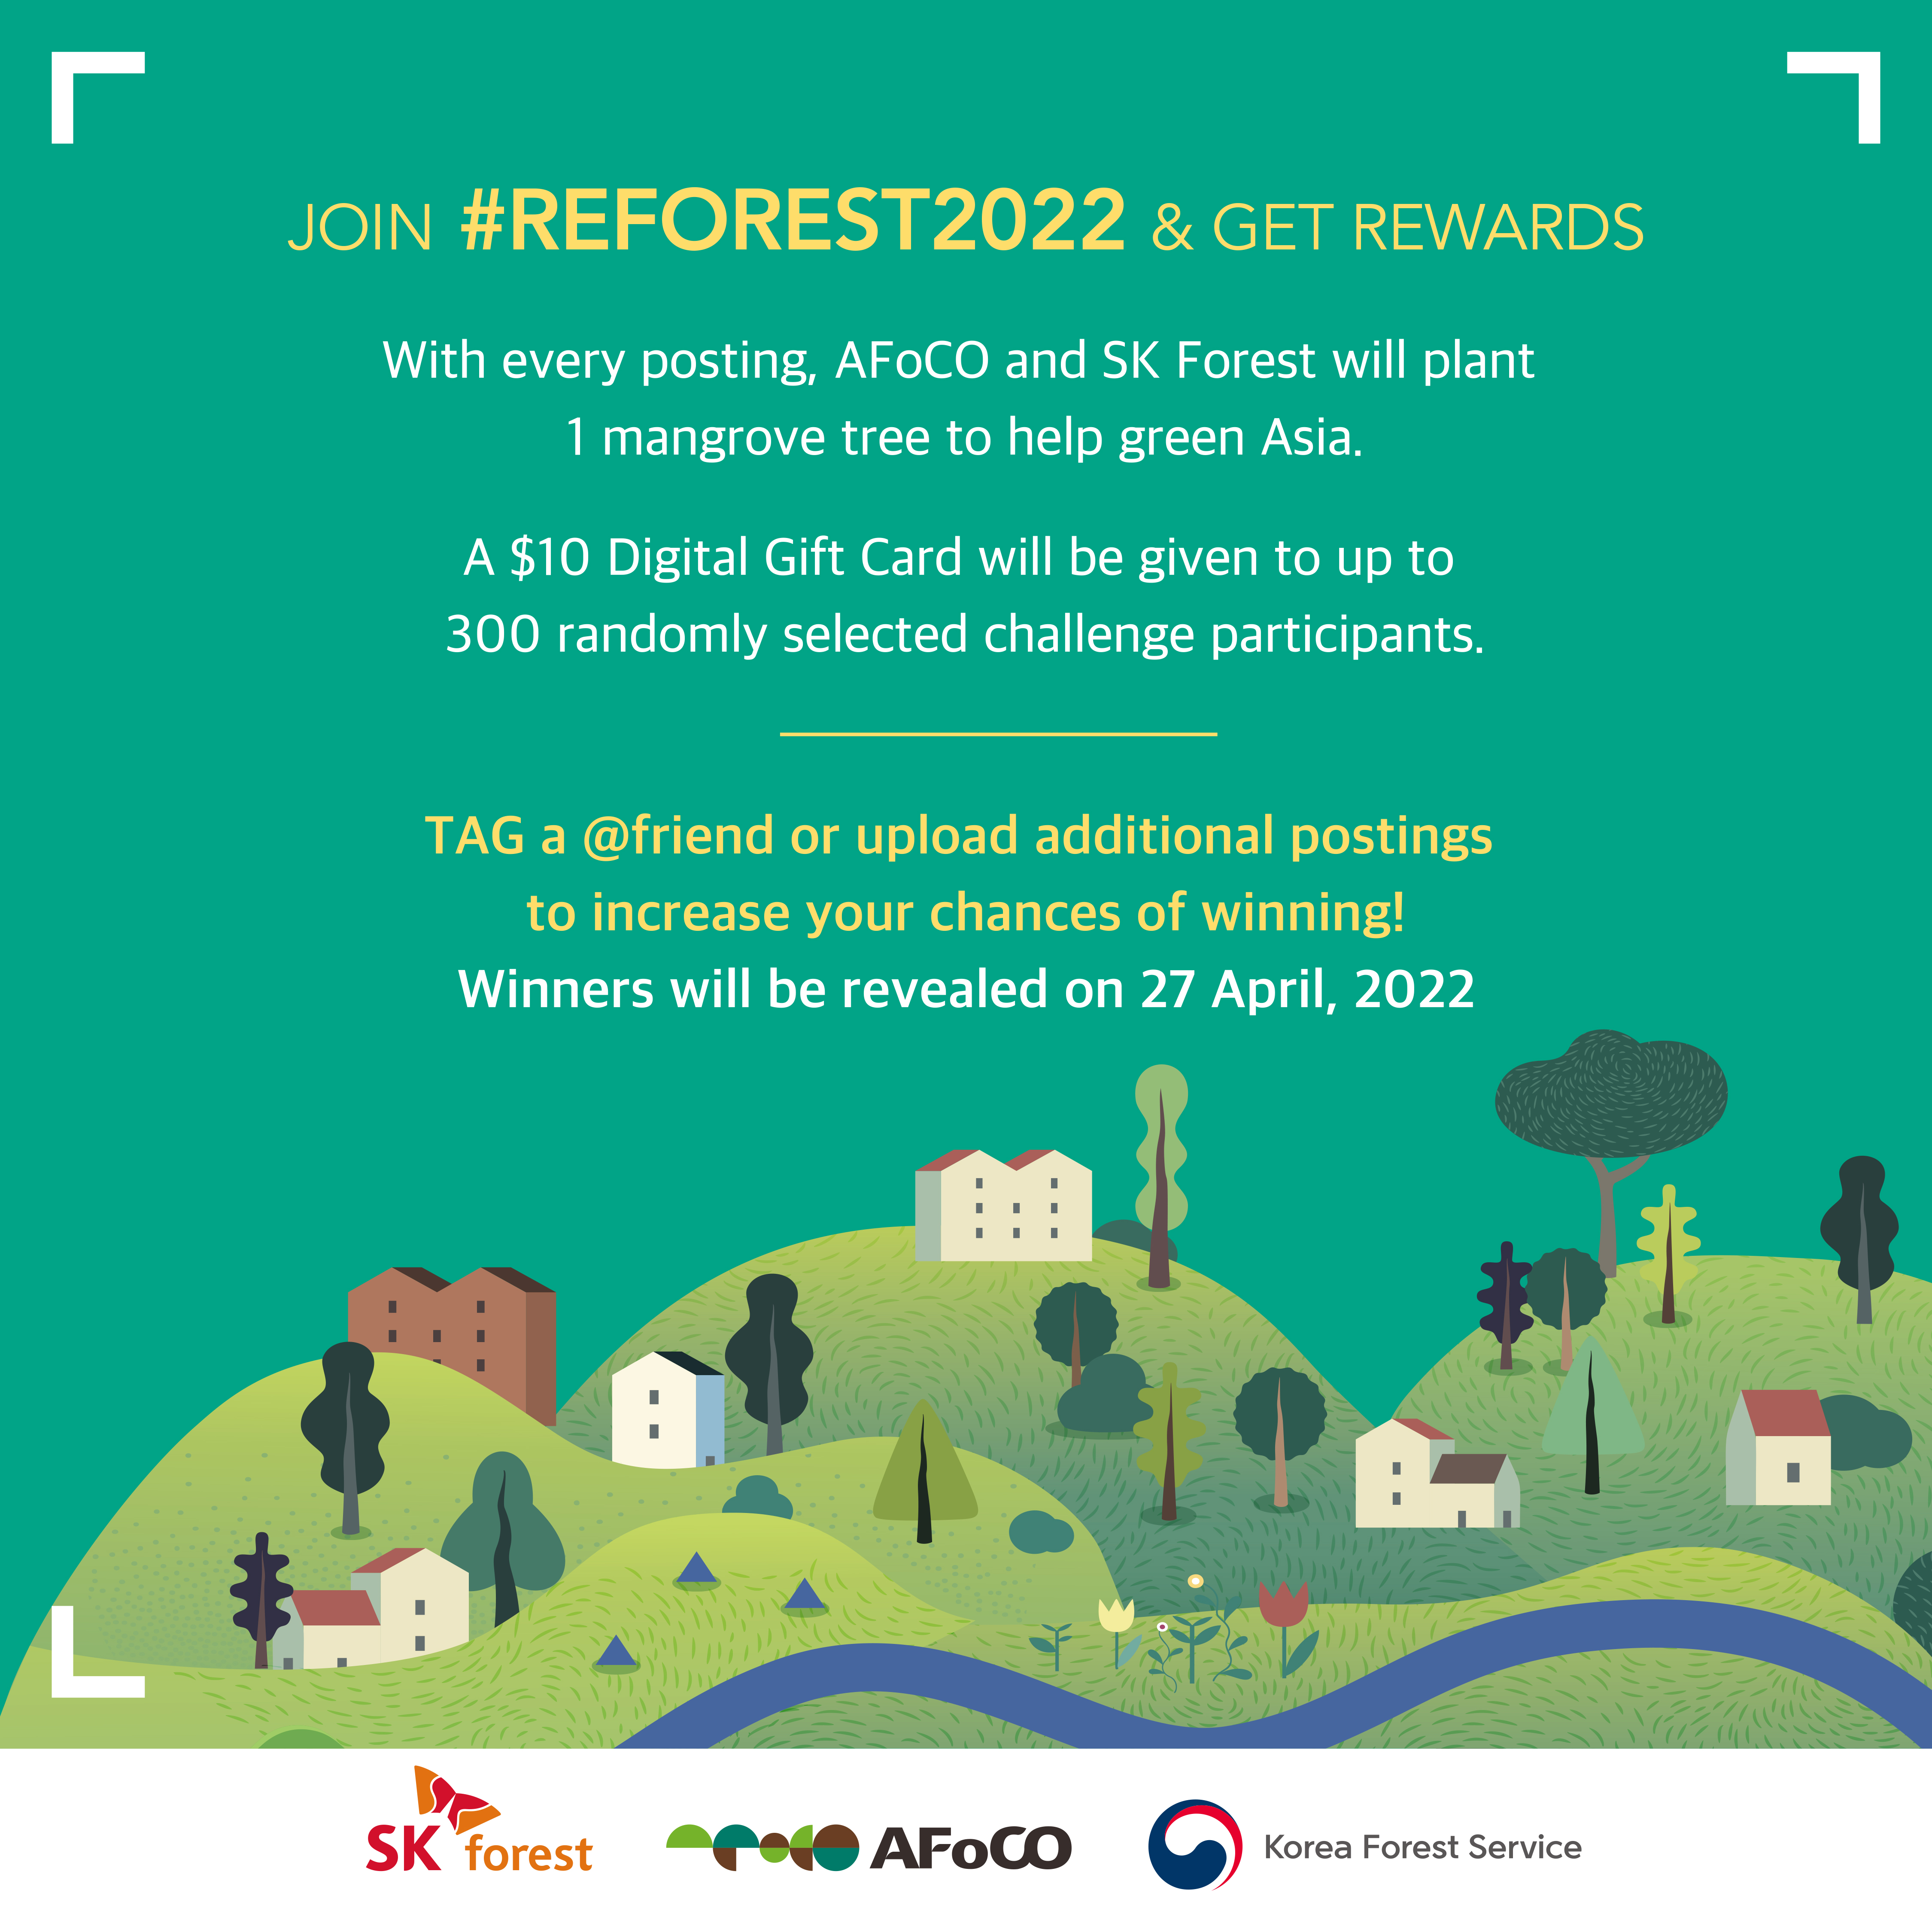 Join #REForest2022 Challenge! 